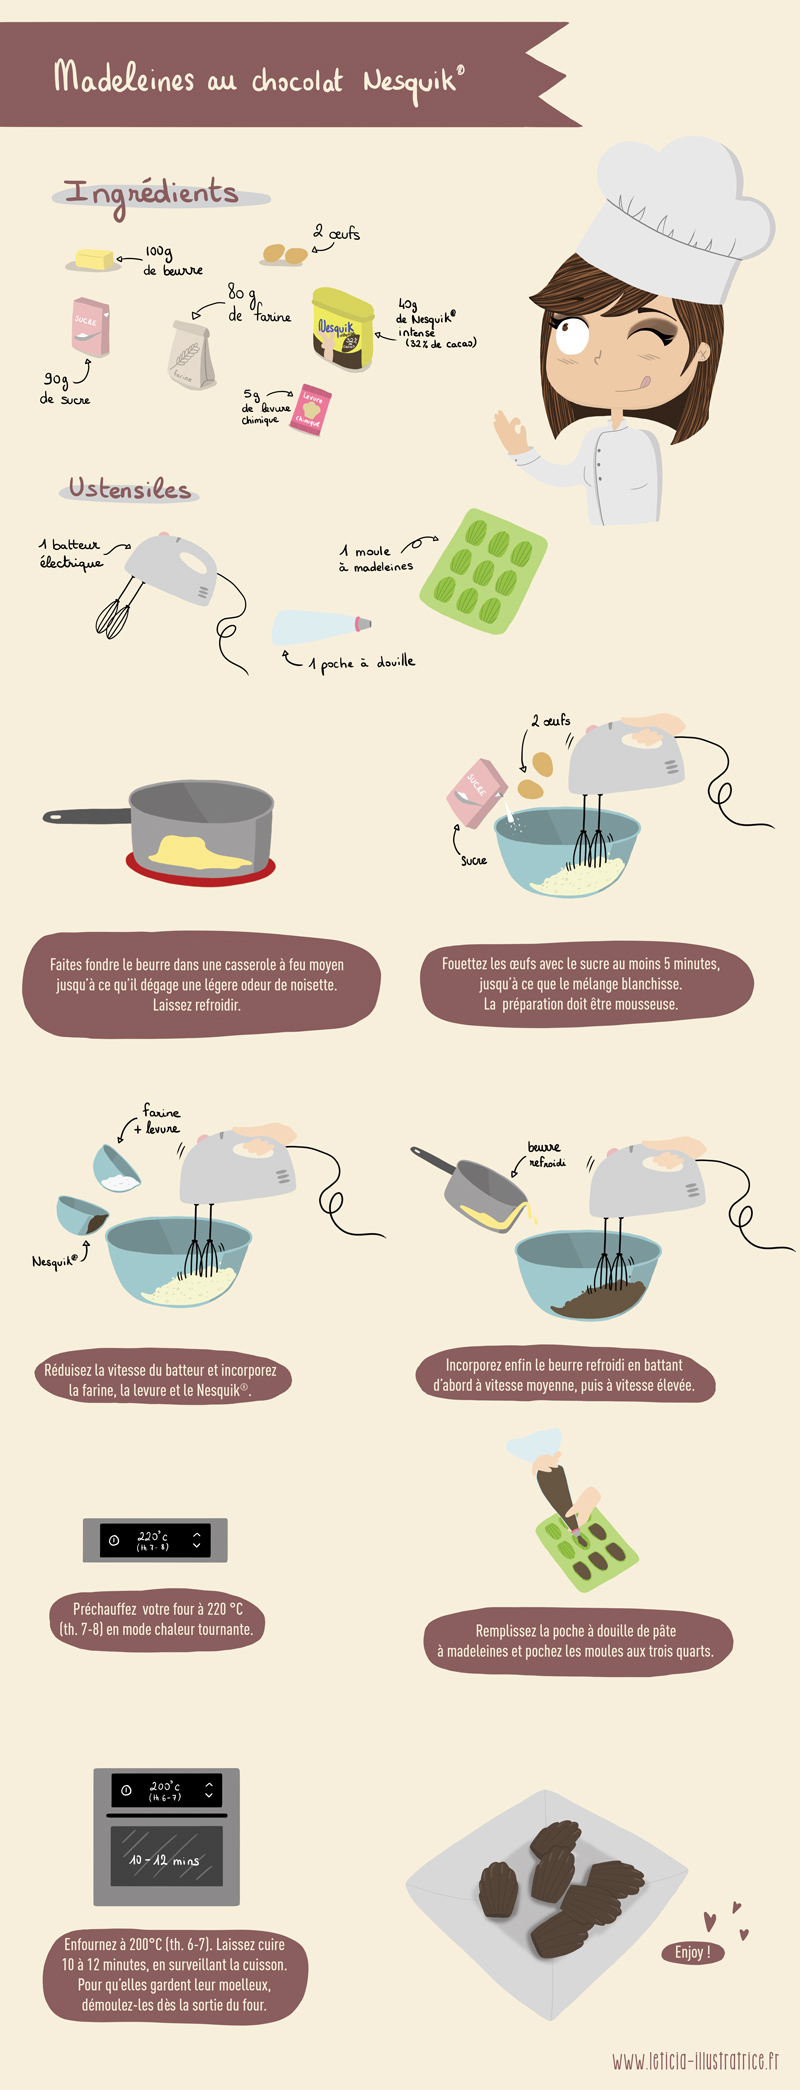 recette illustrée, madeleines au chocolat, recette de madeleines, recette de madeleines au chocolat, cuisine illustrée